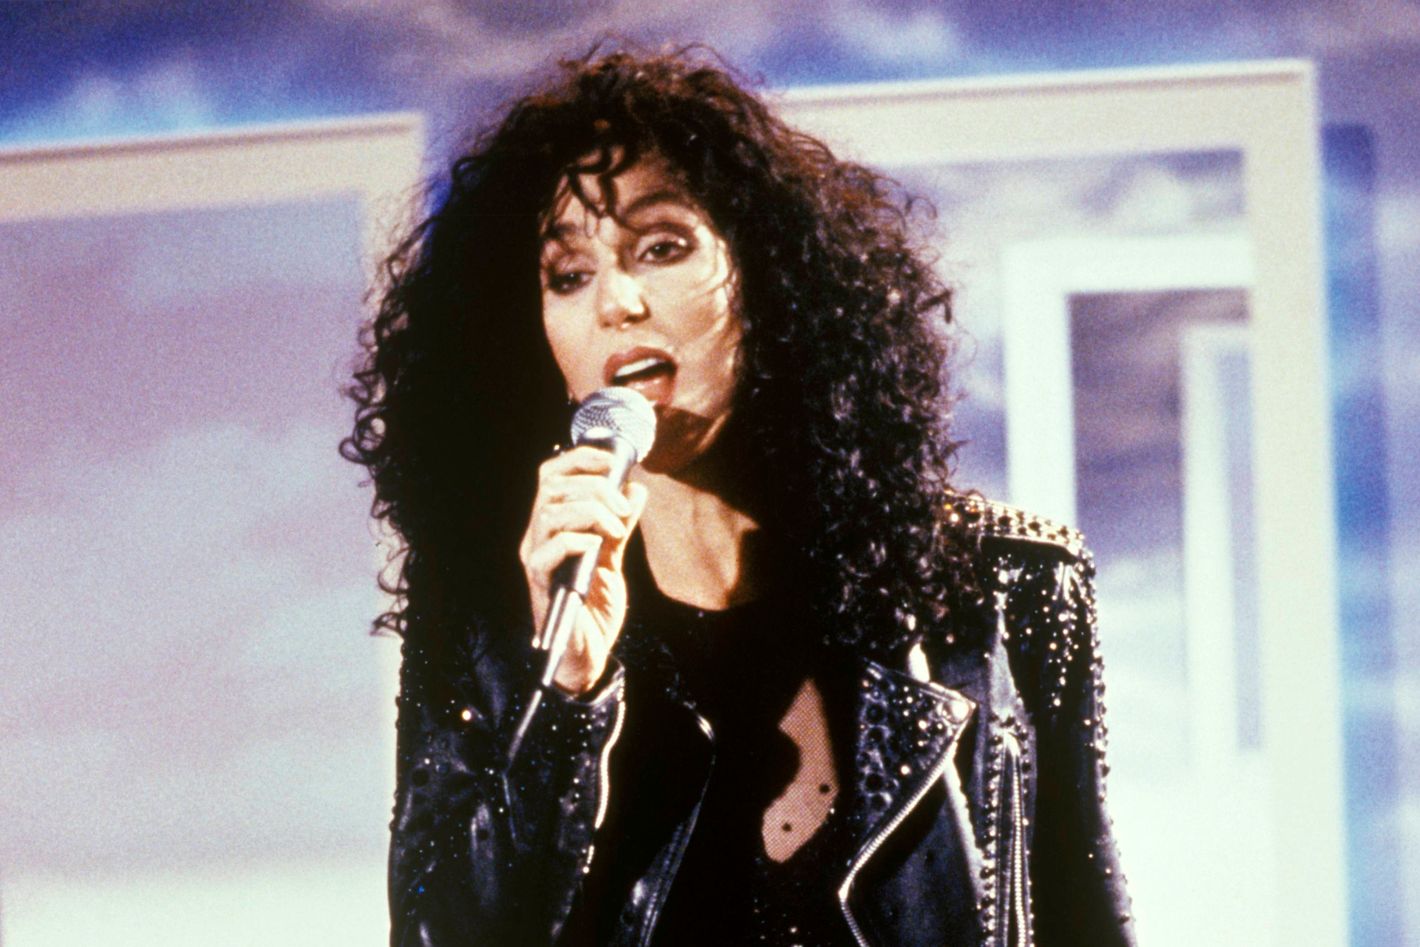 Cher Has Always Been a Rock Star